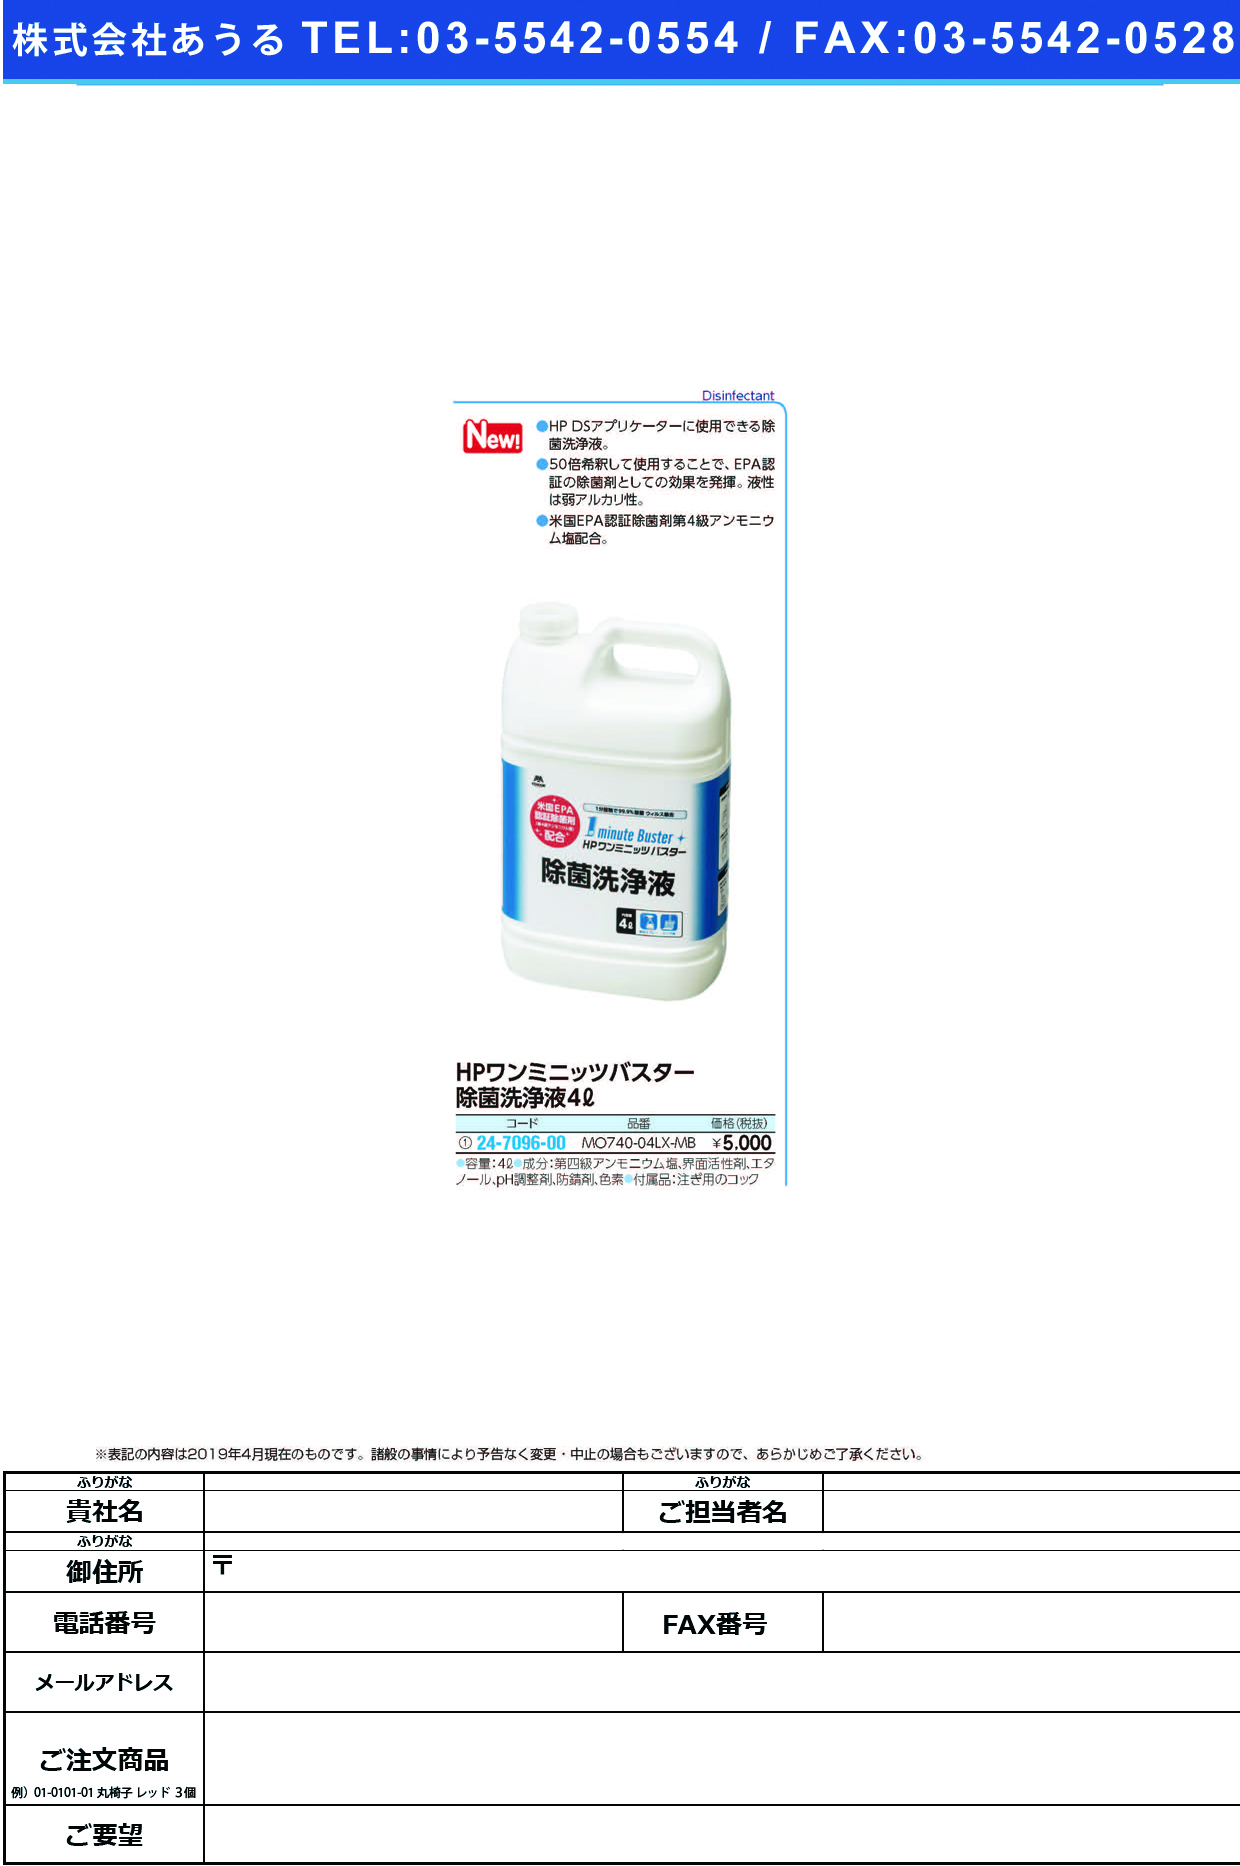 ＨＰワンミニッツバスター除菌洗浄液MO740-04LX-MB(4L) HPﾜﾝﾐﾆｯﾂﾊﾞｽﾀｰｼﾞｮｷﾝｾﾝ(山崎産業)